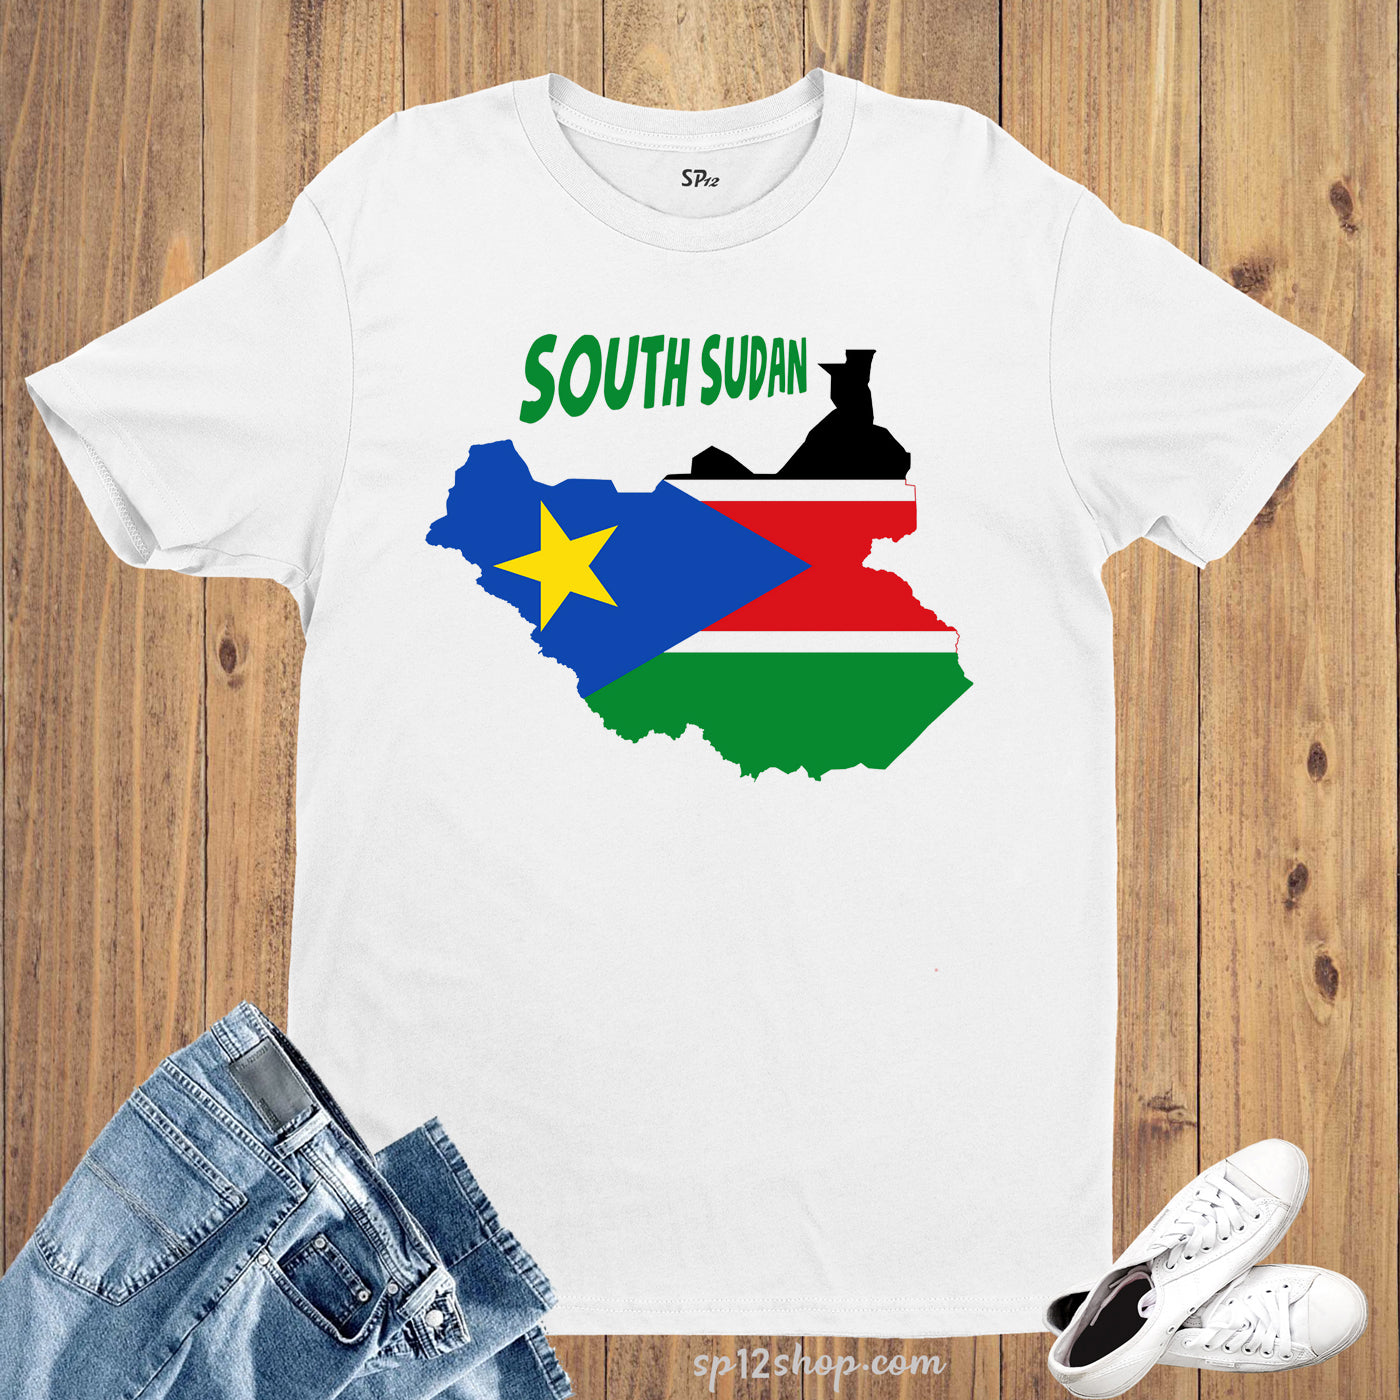 South Sudan Flag T Shirt Olympics FIFA World Cup Country Flag Tee Shirt